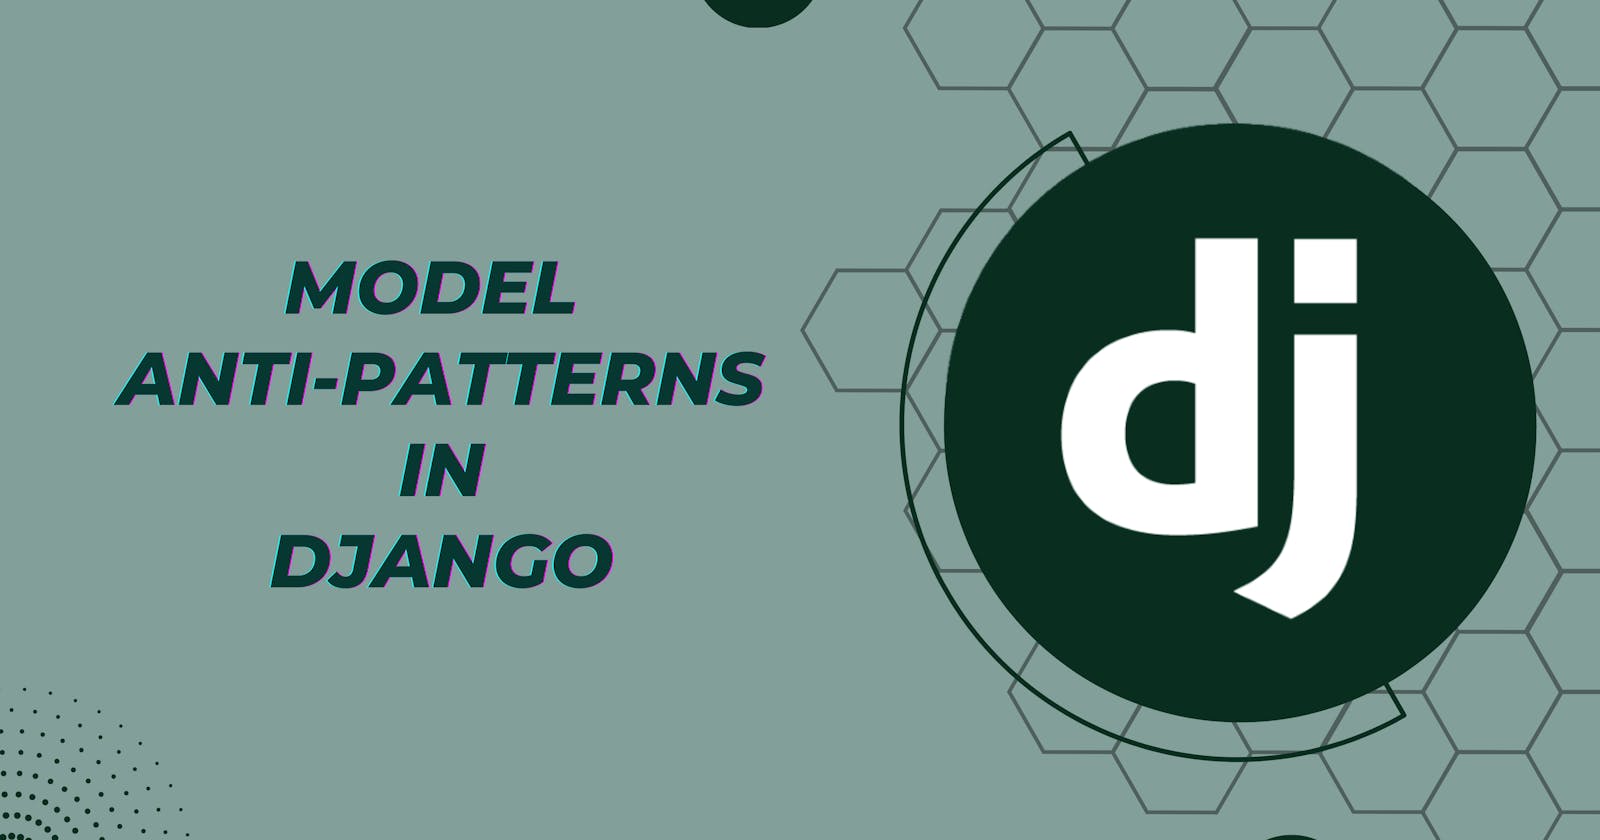 Model Anti-patterns in Django